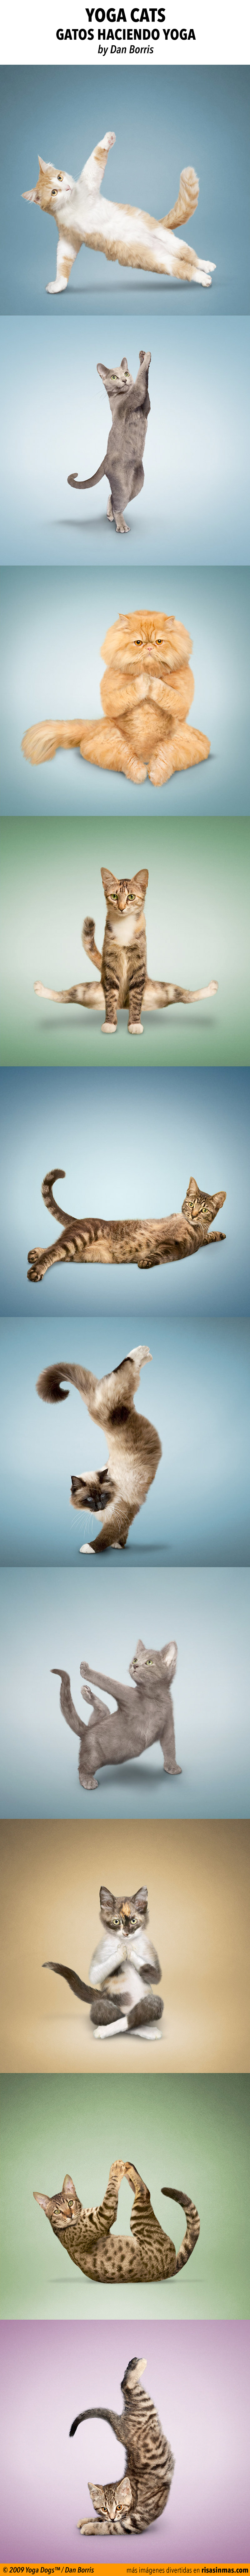 Yoga cats, gatos haciendo yoga